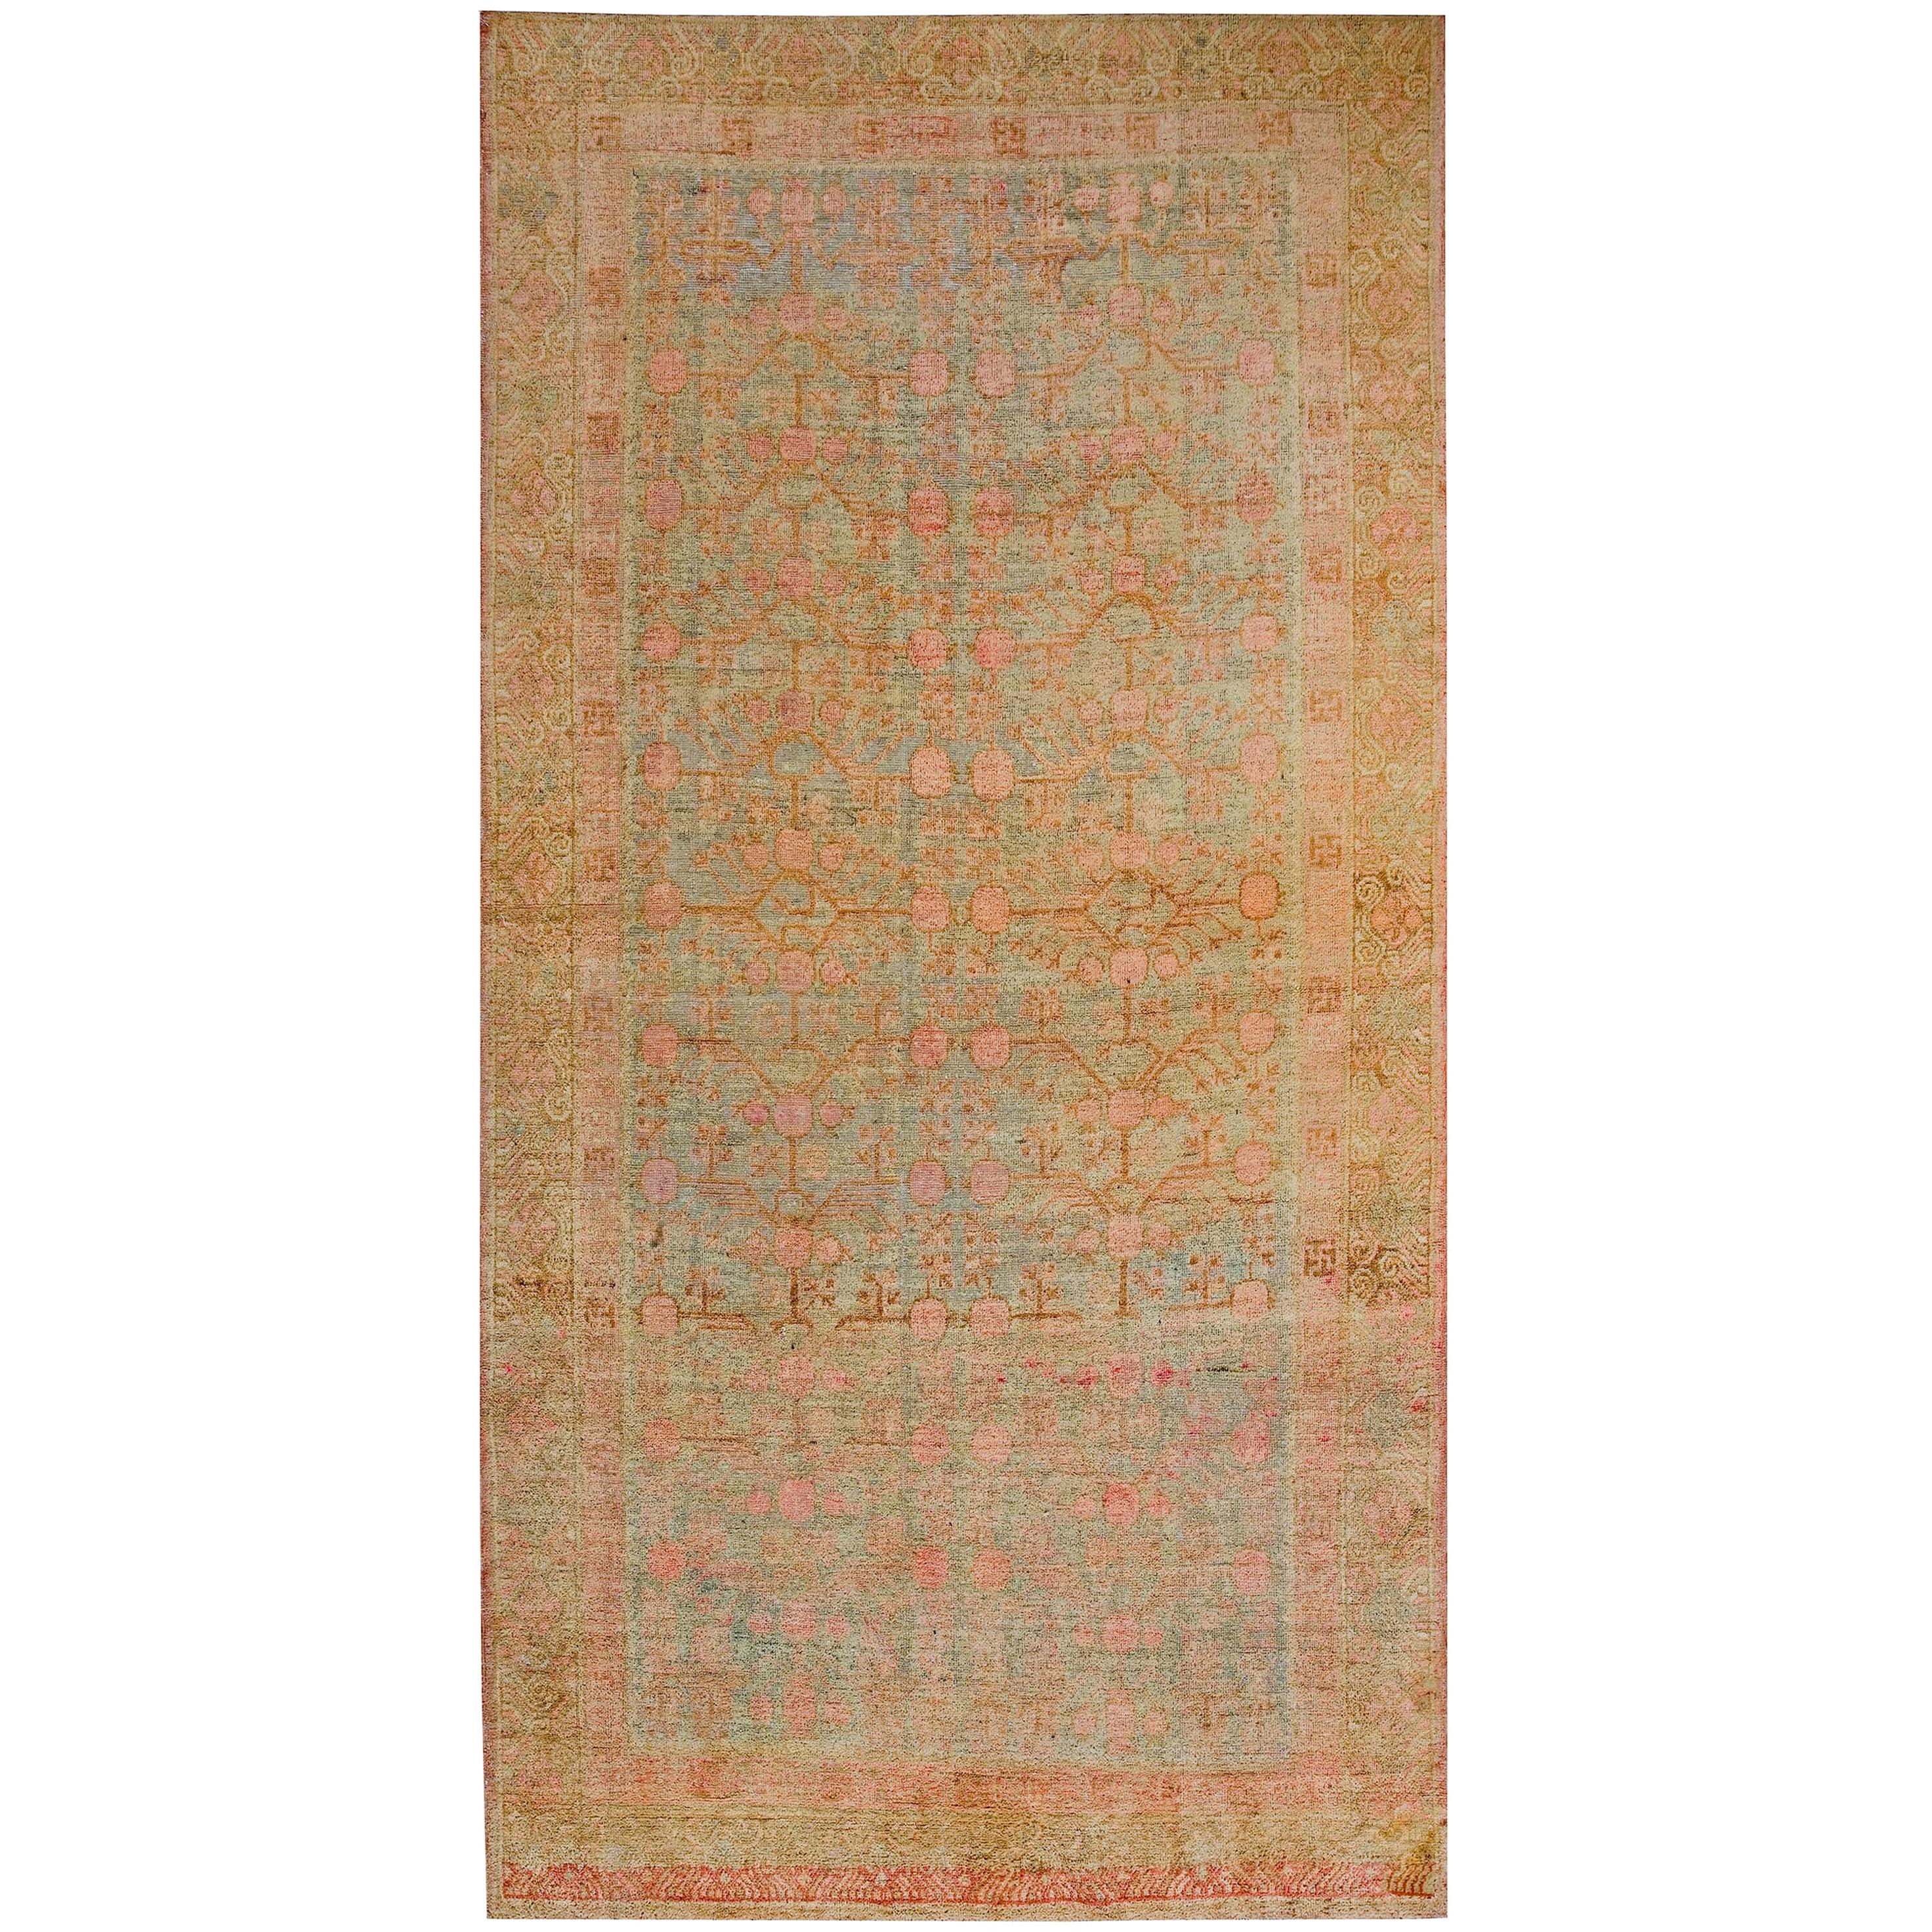 Early 20th Century Central Asian Khotan Carpet ( 5'10" x 11'8" - 178 x 355 cm )